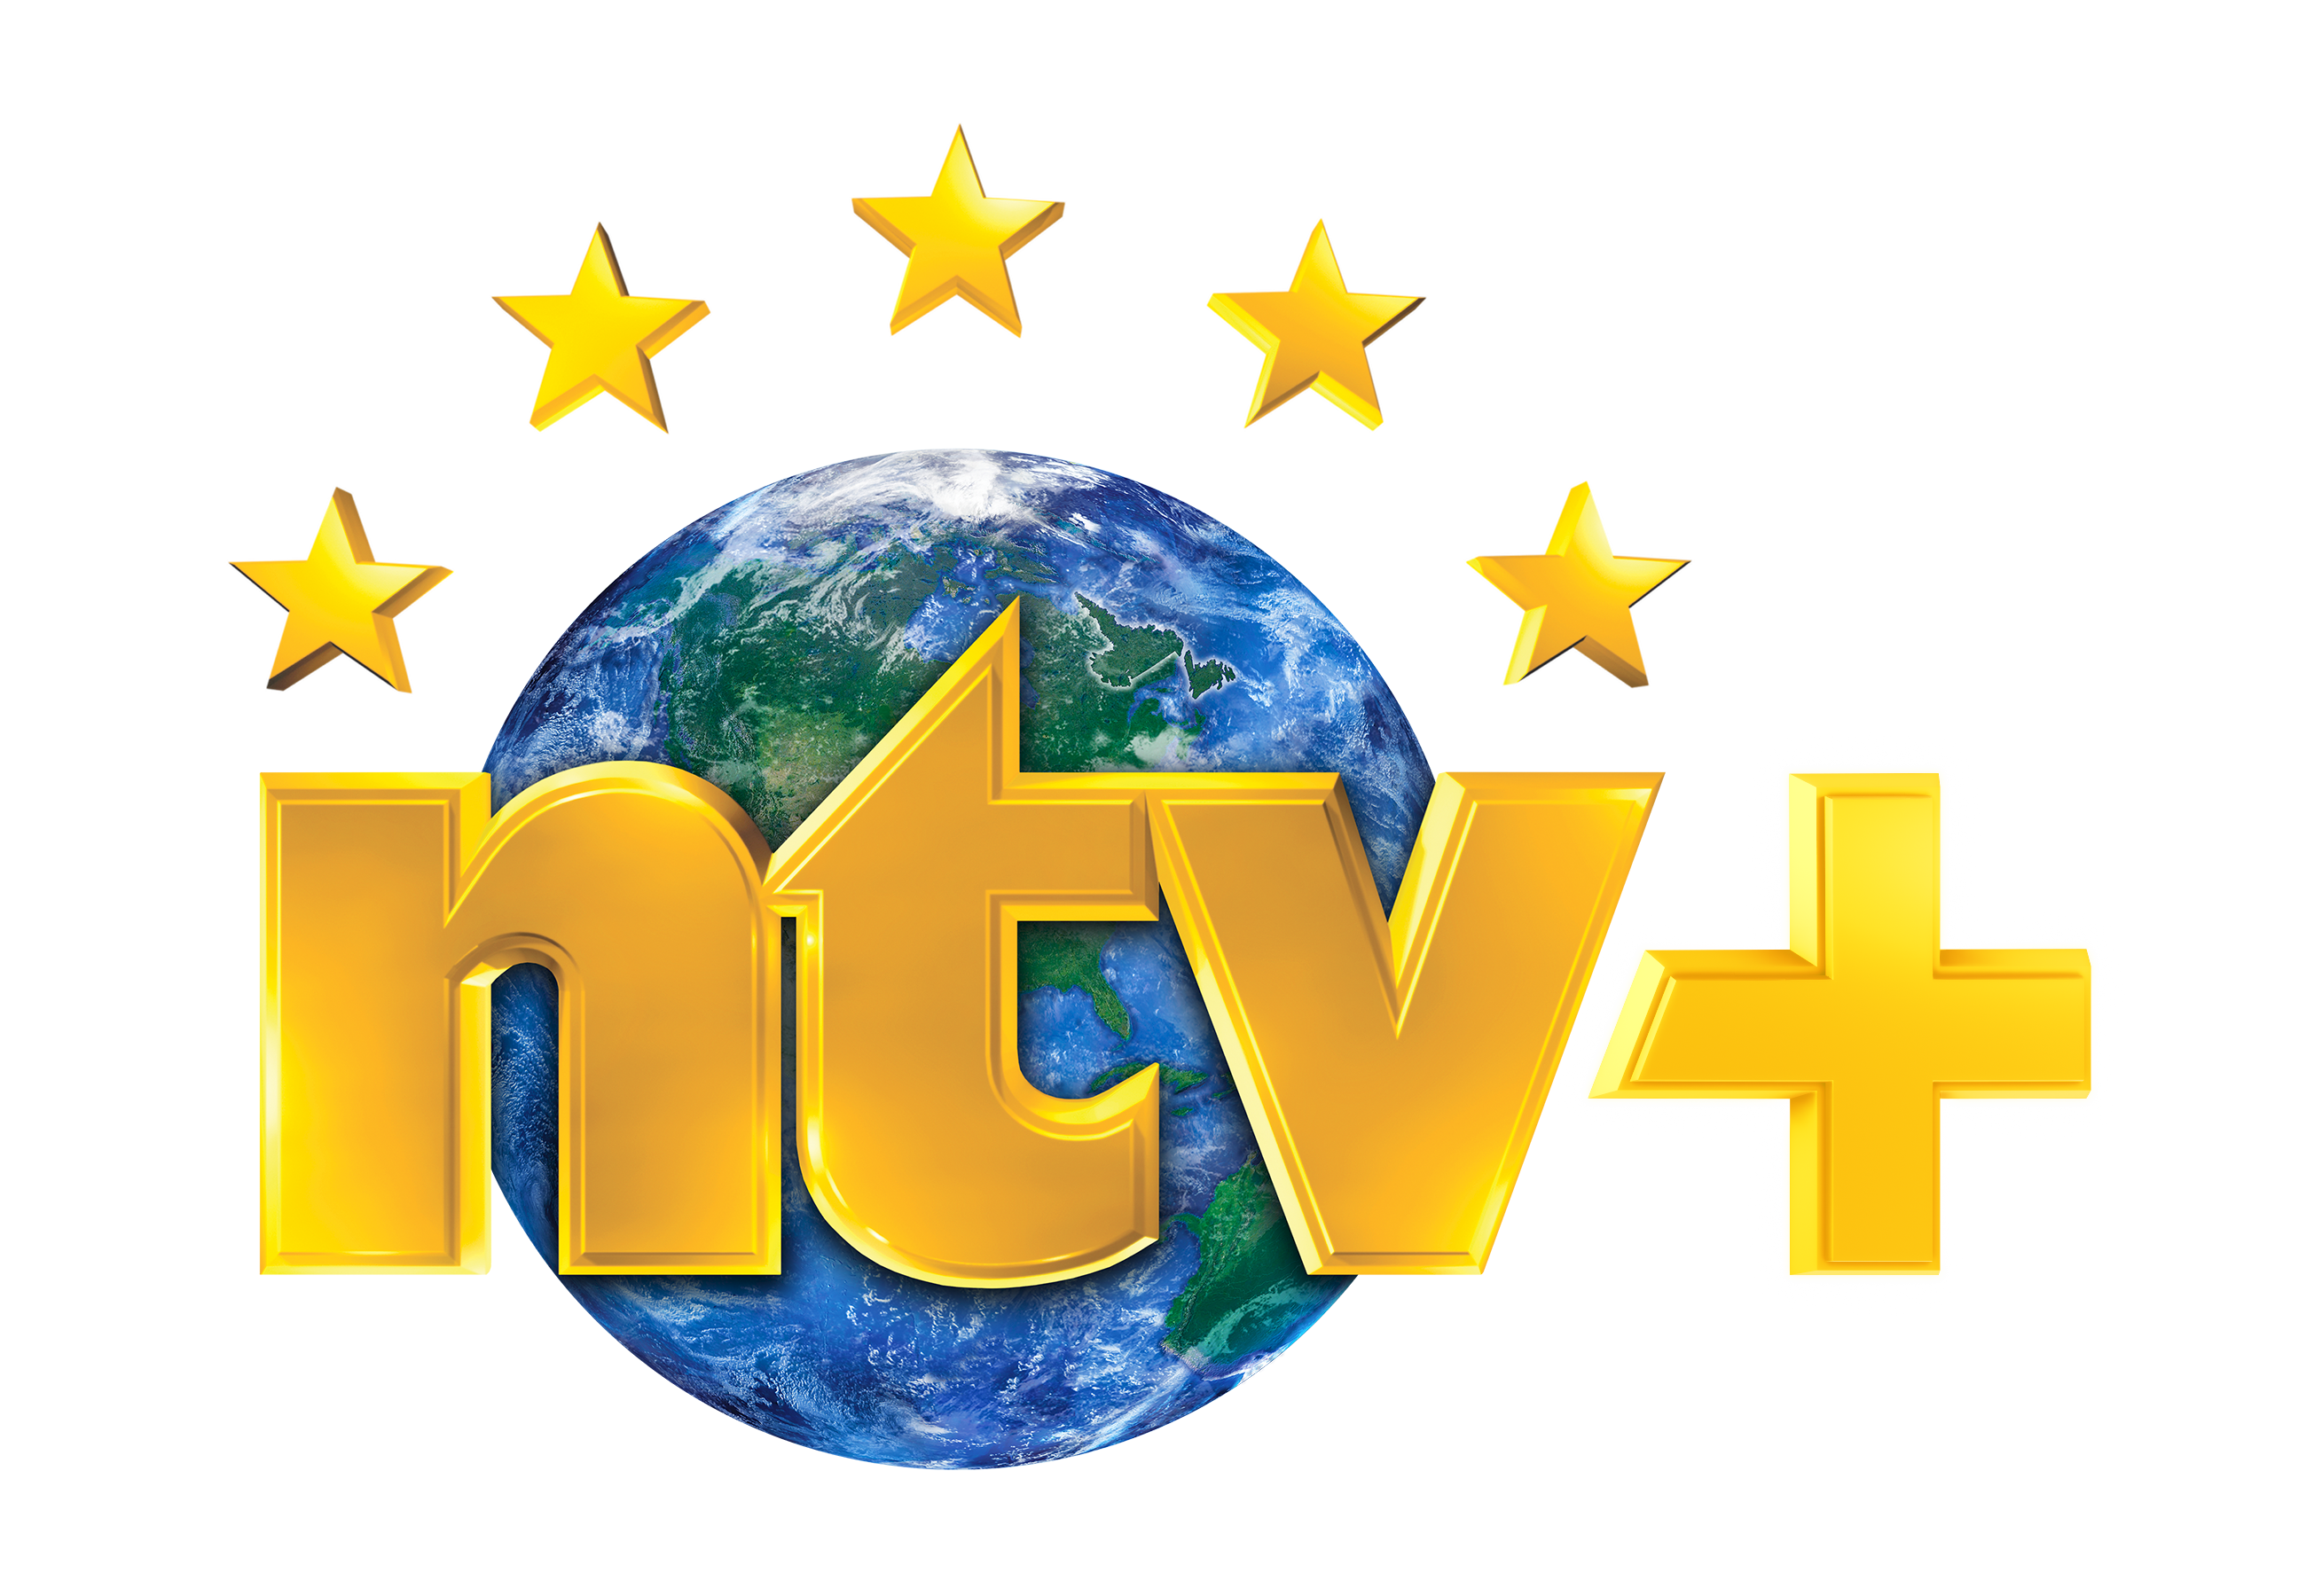 NTV+